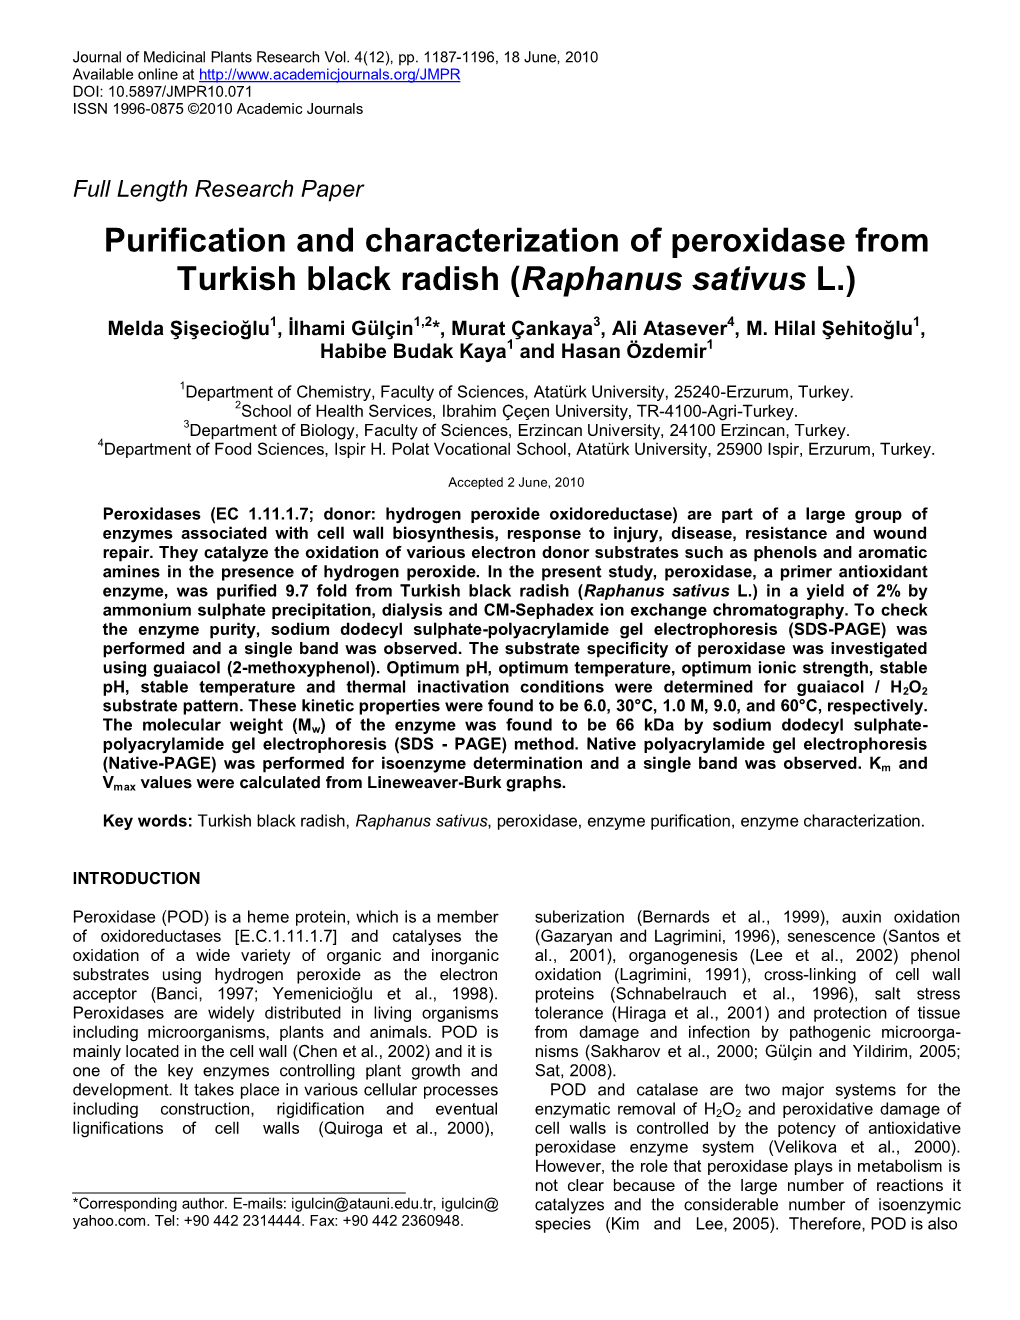 Purification and Characterization of Peroxidase from Turkish Black Radish (Raphanus Sativus L.)